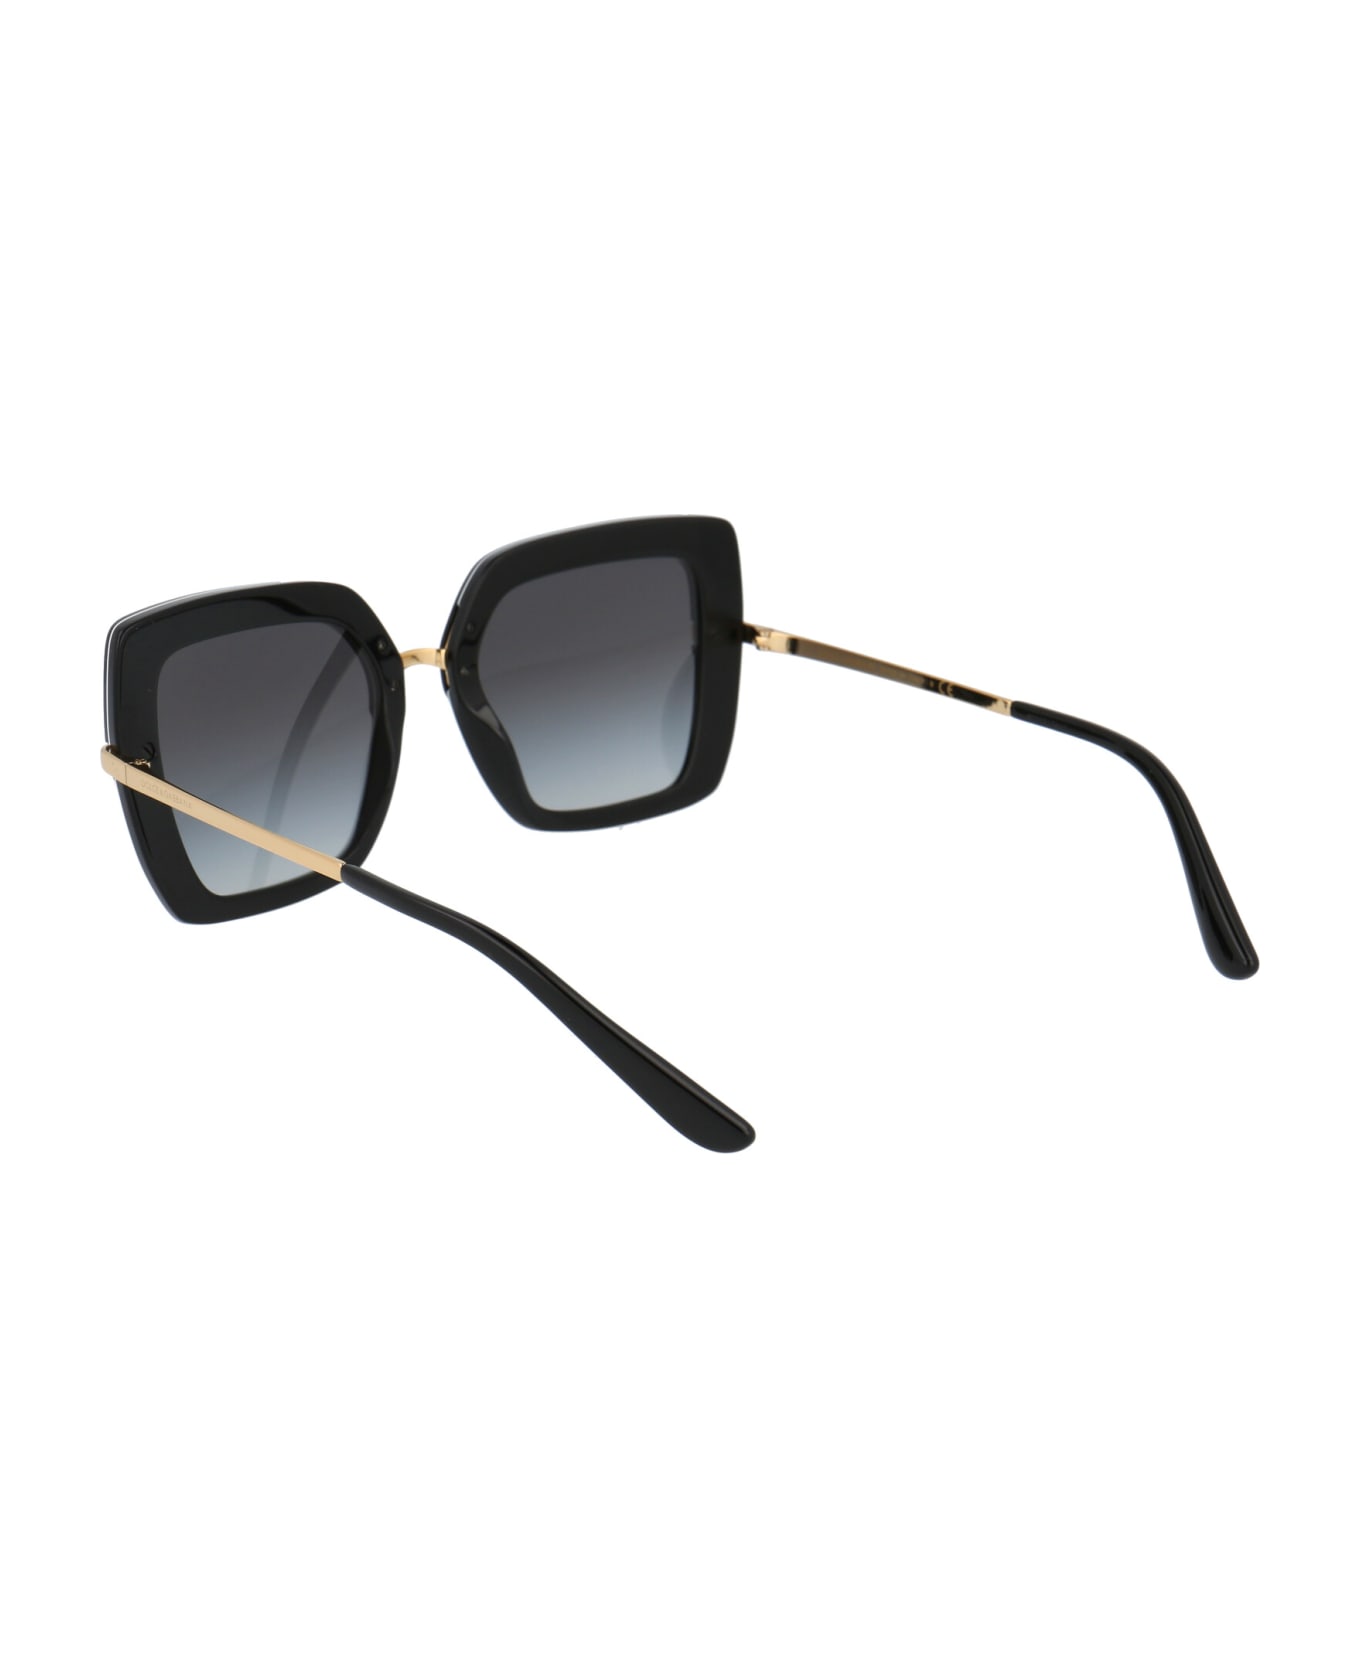 Dolce & Gabbana Eyewear 0dg4373 Sunglasses - 32448G TOP BLACK ON PRINT LEO/BLACK